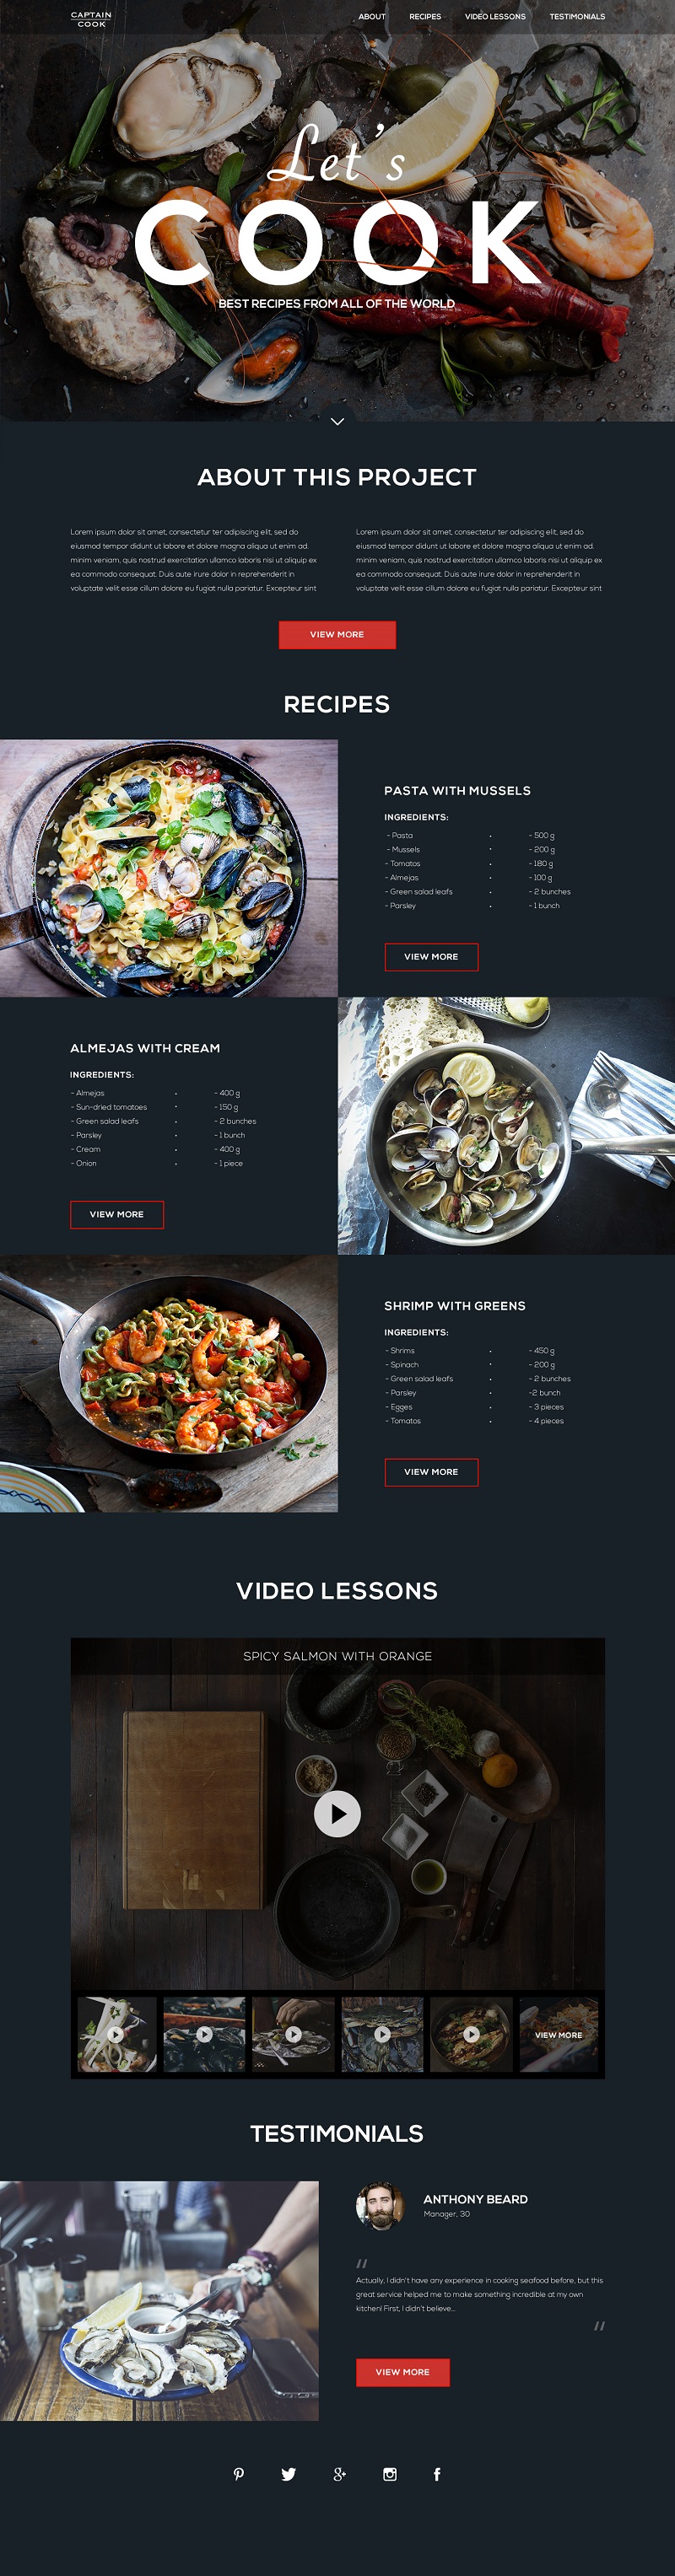 Recipes_cooking_website_design